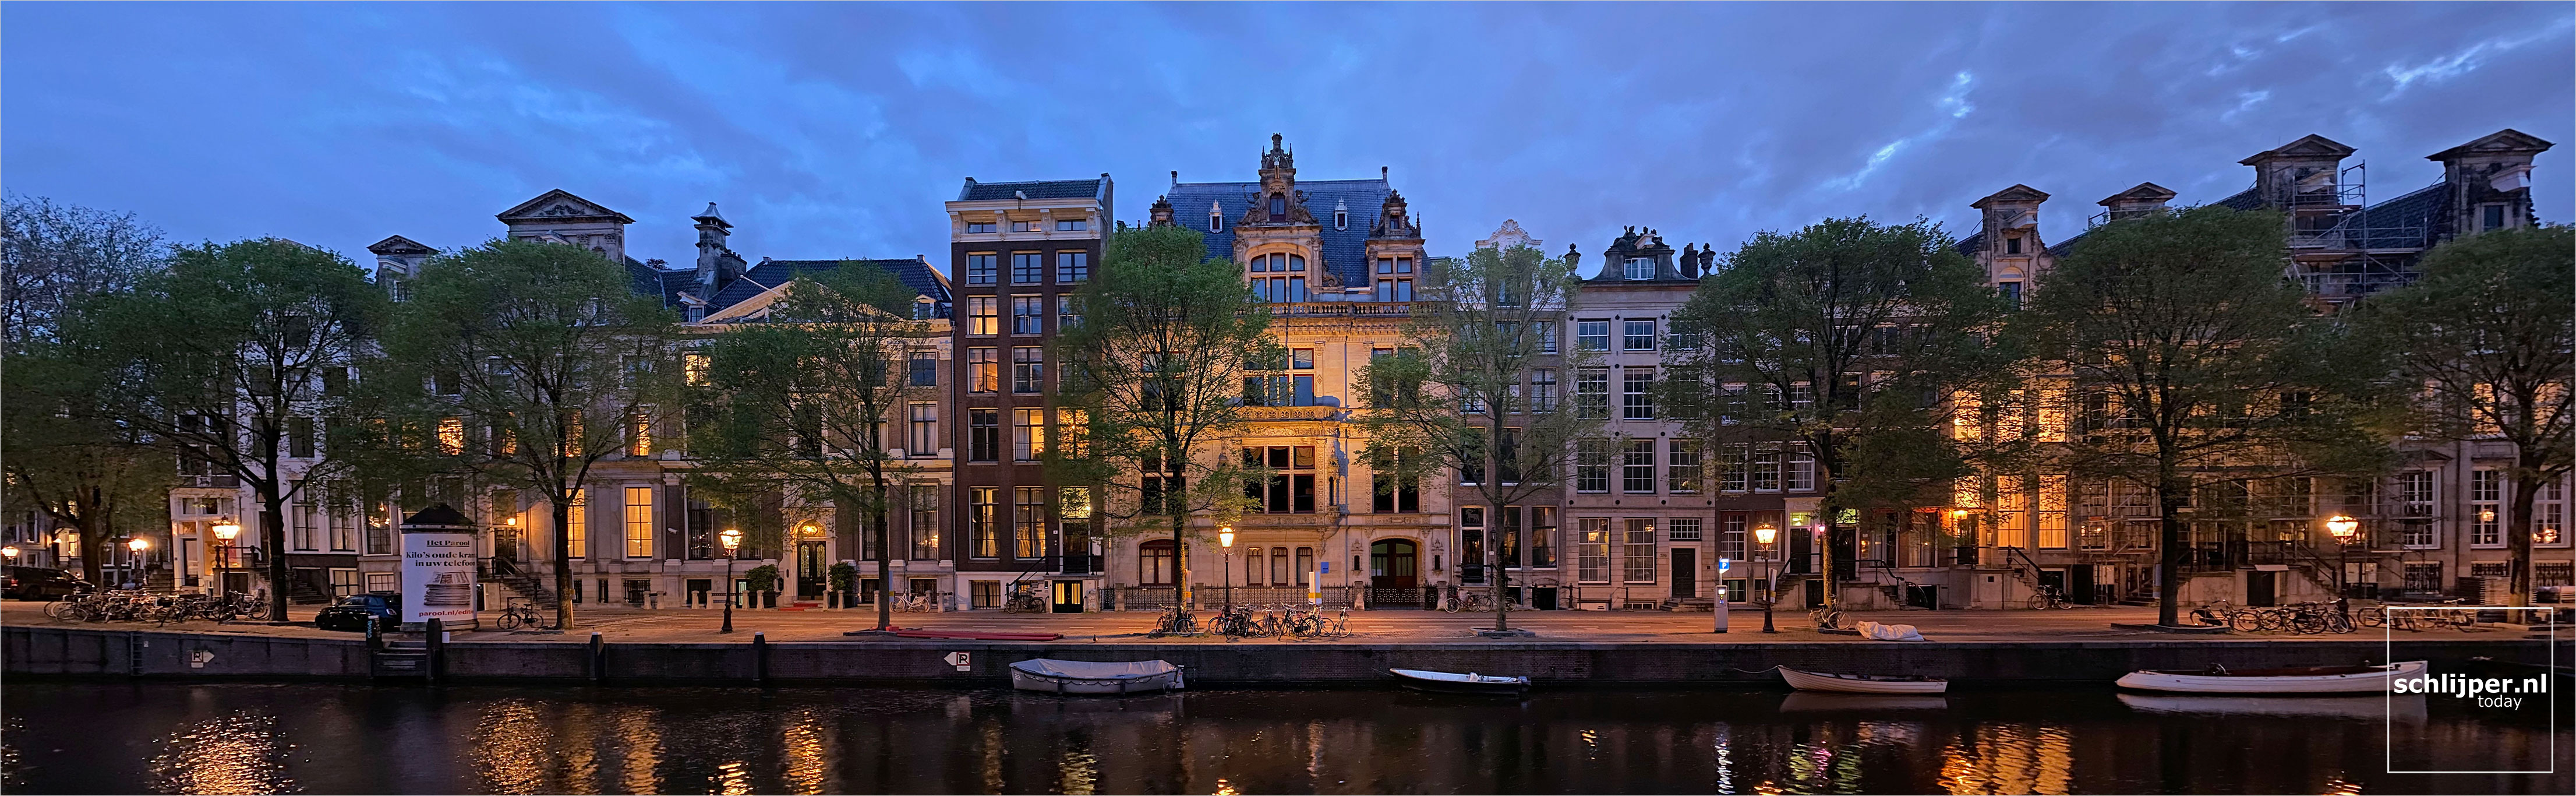 The Netherlands, Amsterdam, 20 mei 2021